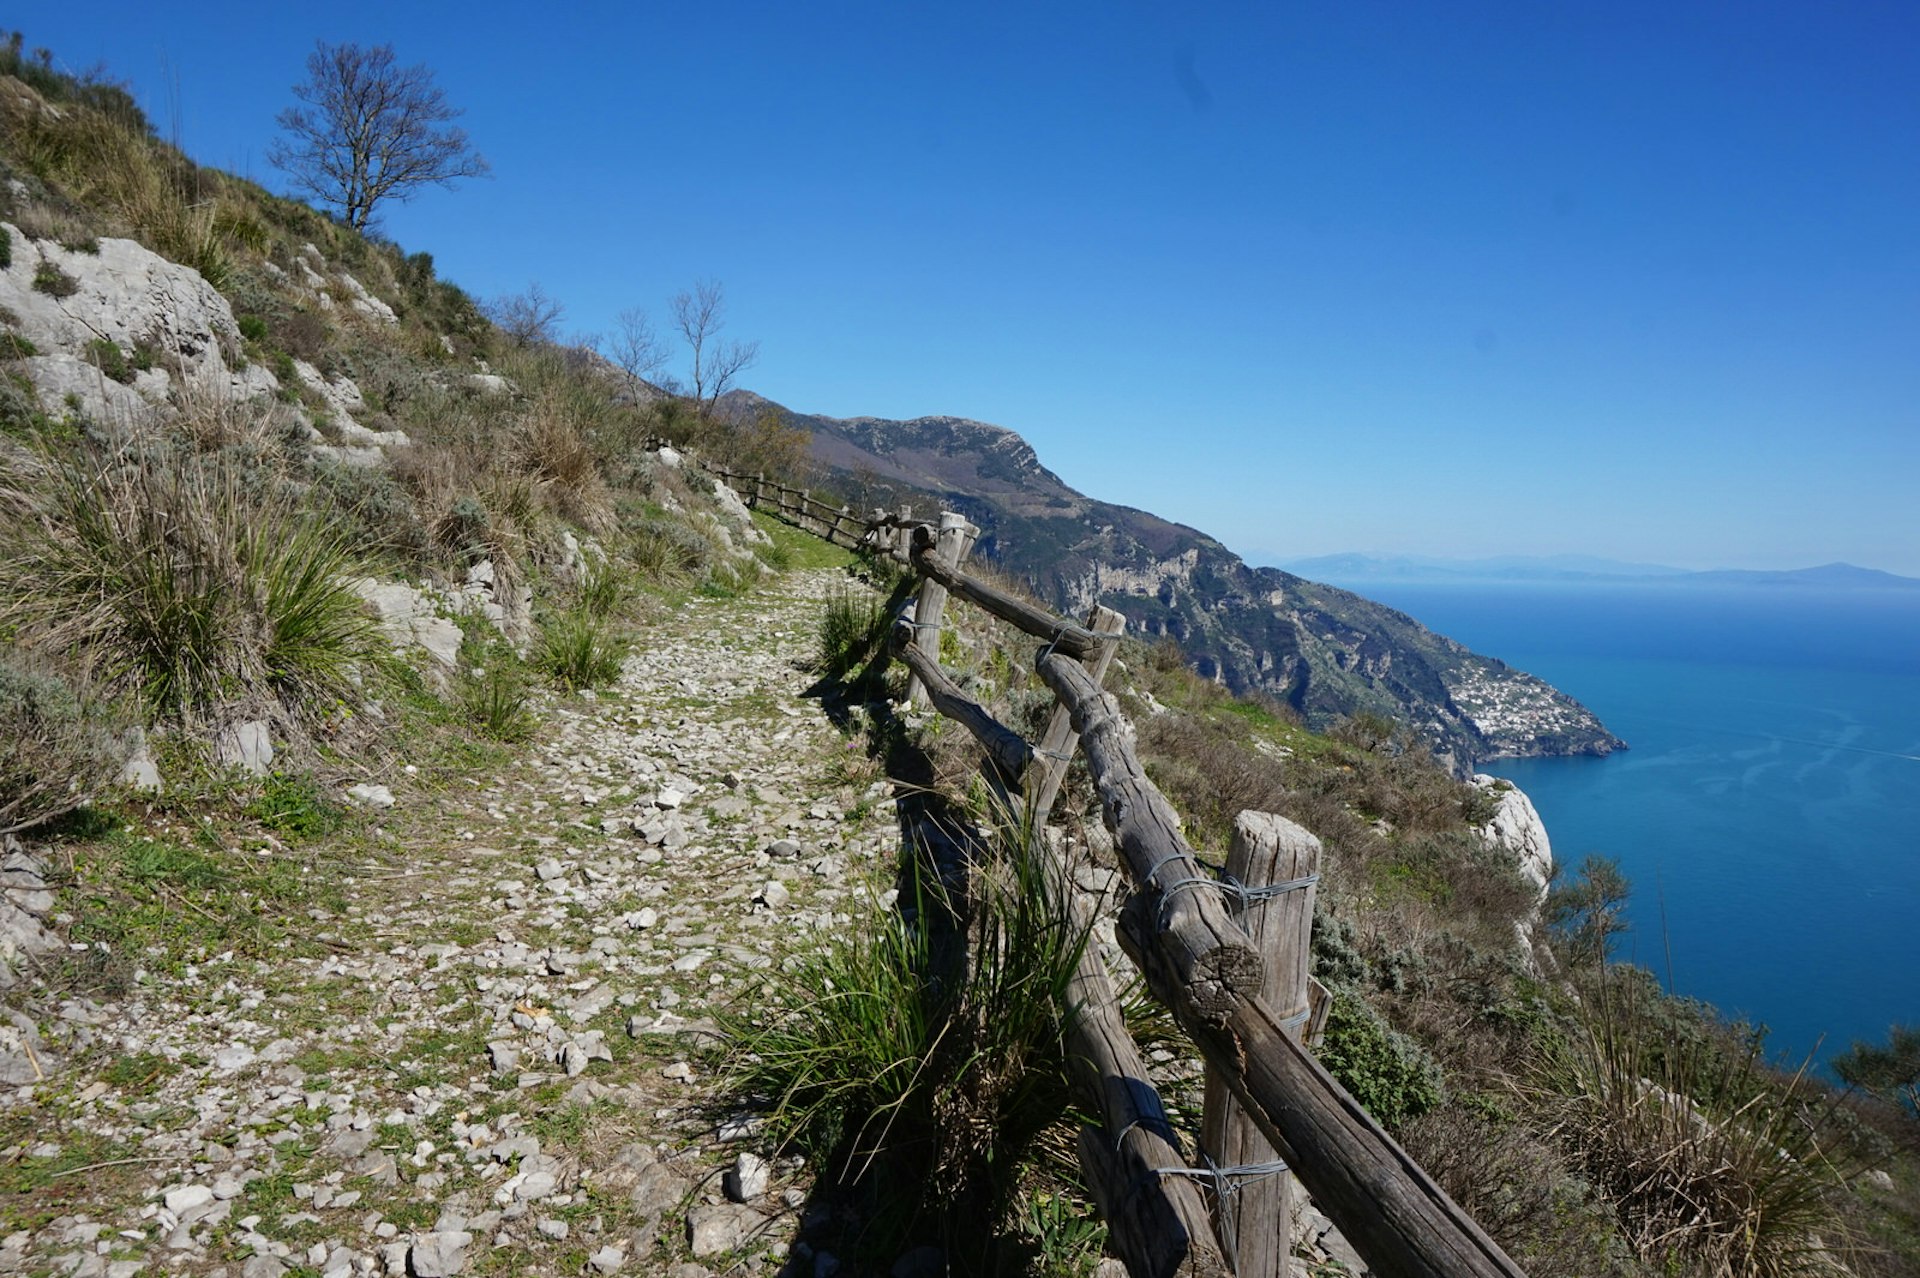 A rocky, fenced coastal path